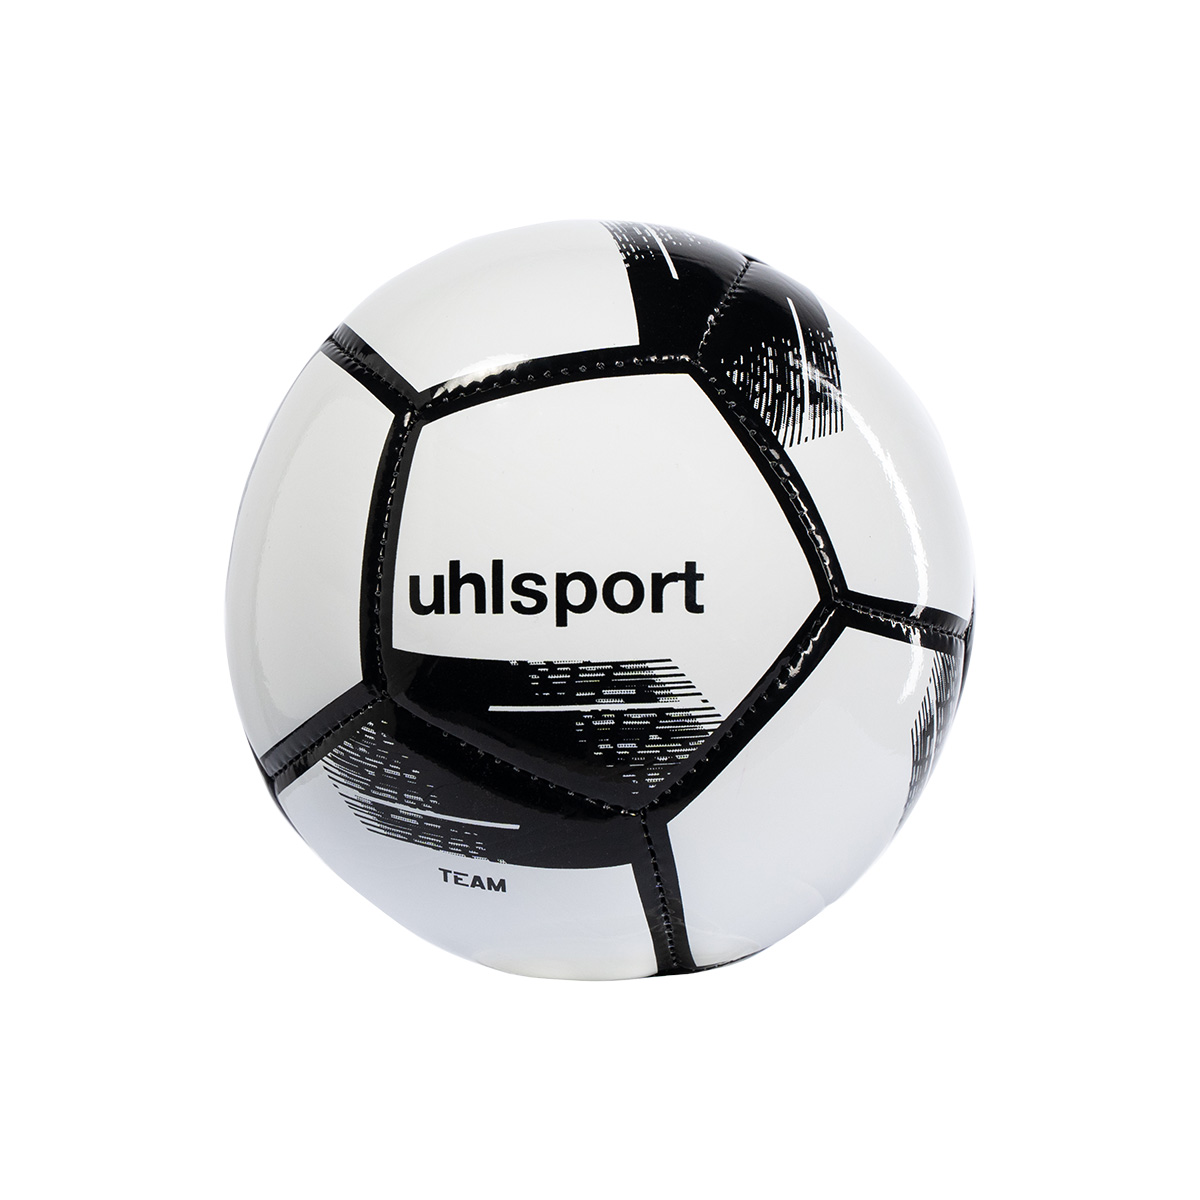 Ballon de foot - Uhlsport - Revolution - taille 5